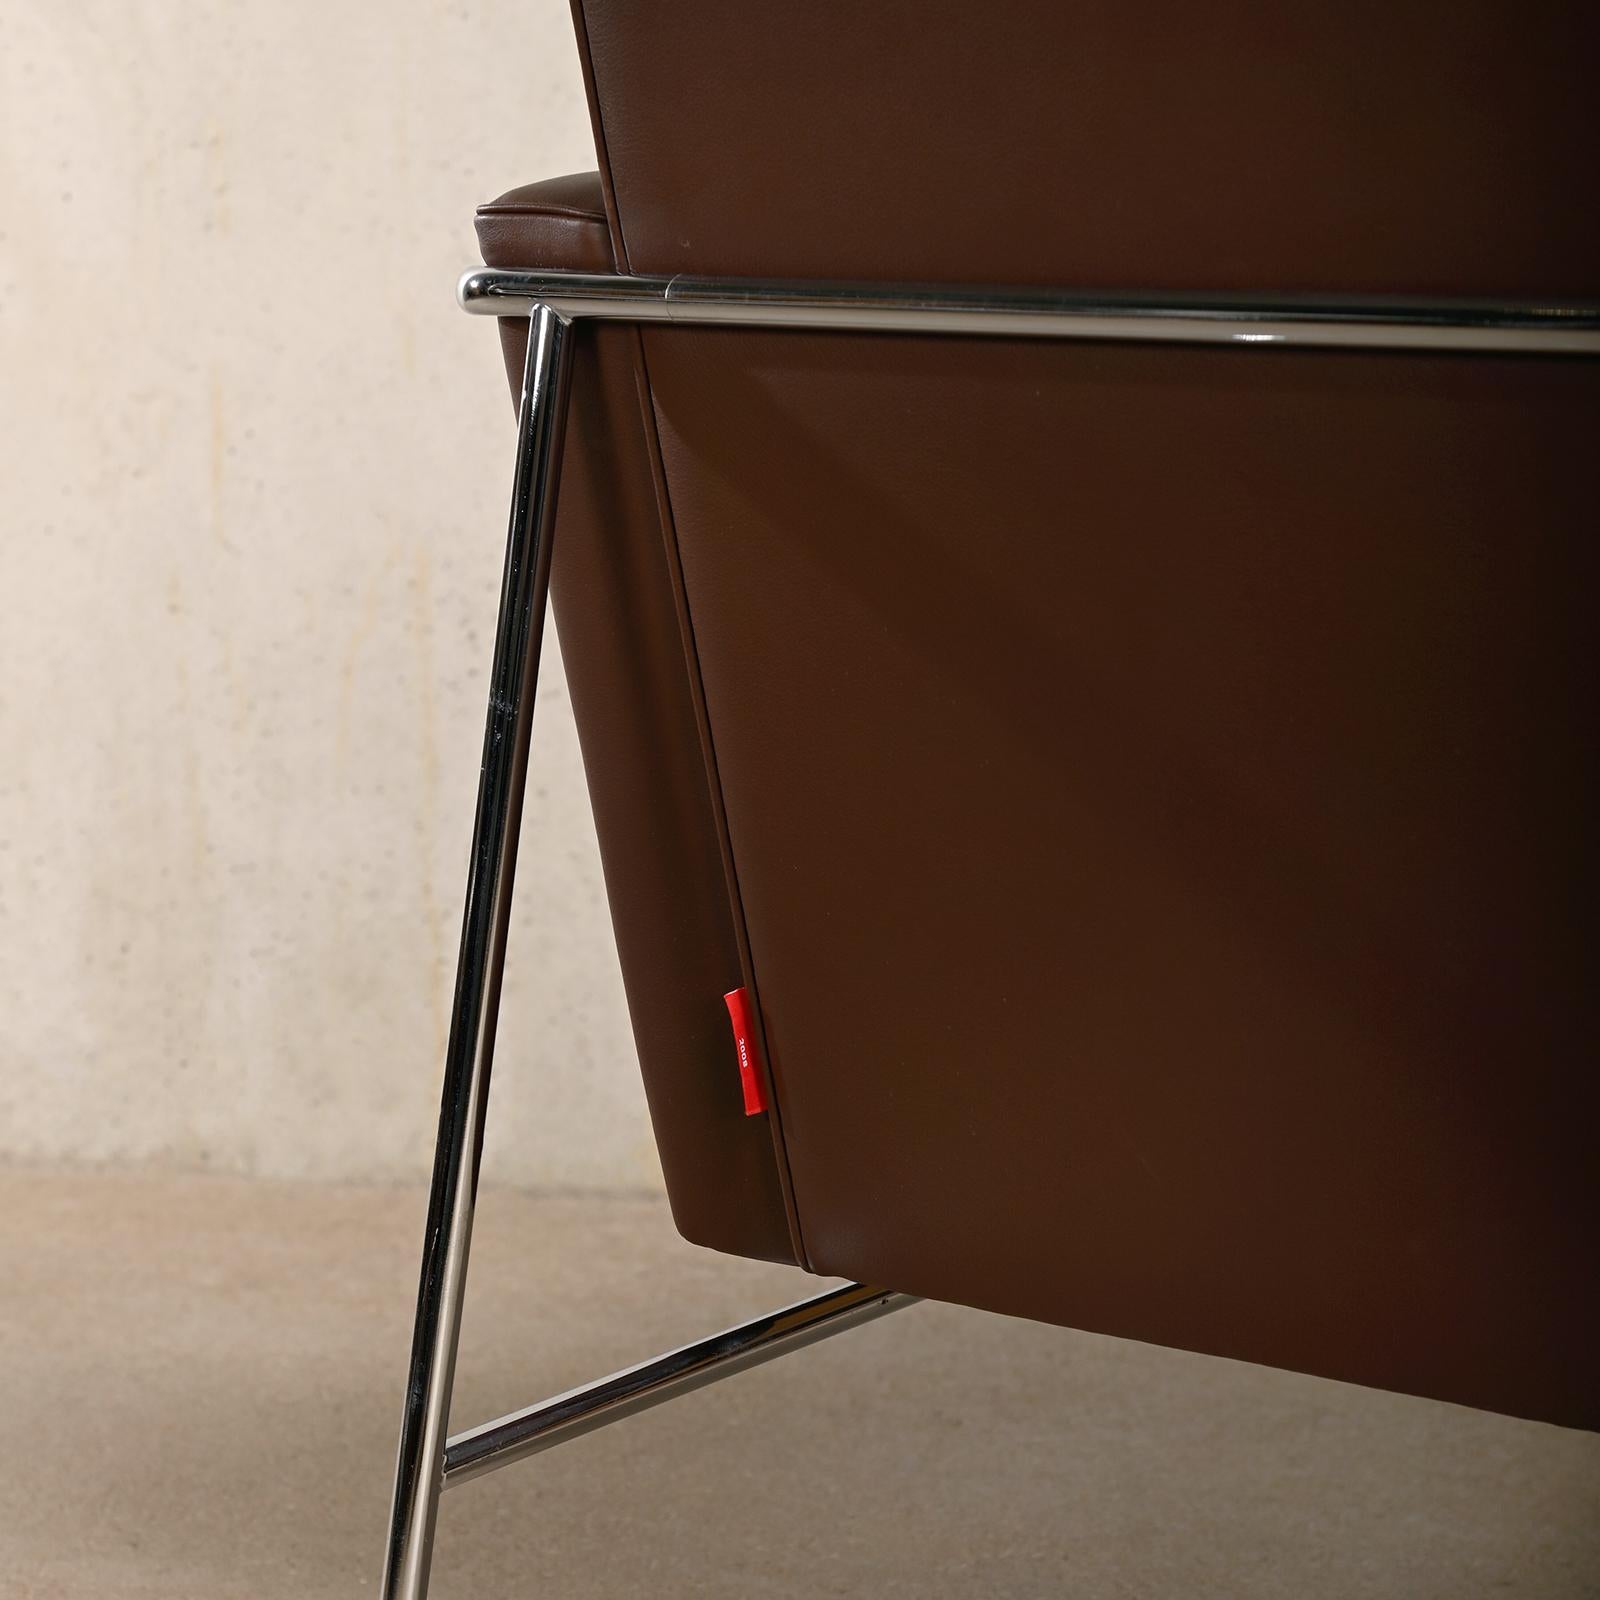 Arne Jacobsen Pair Armchairs 3300 Series in Chestnut leather for Fritz Hansen For Sale 8